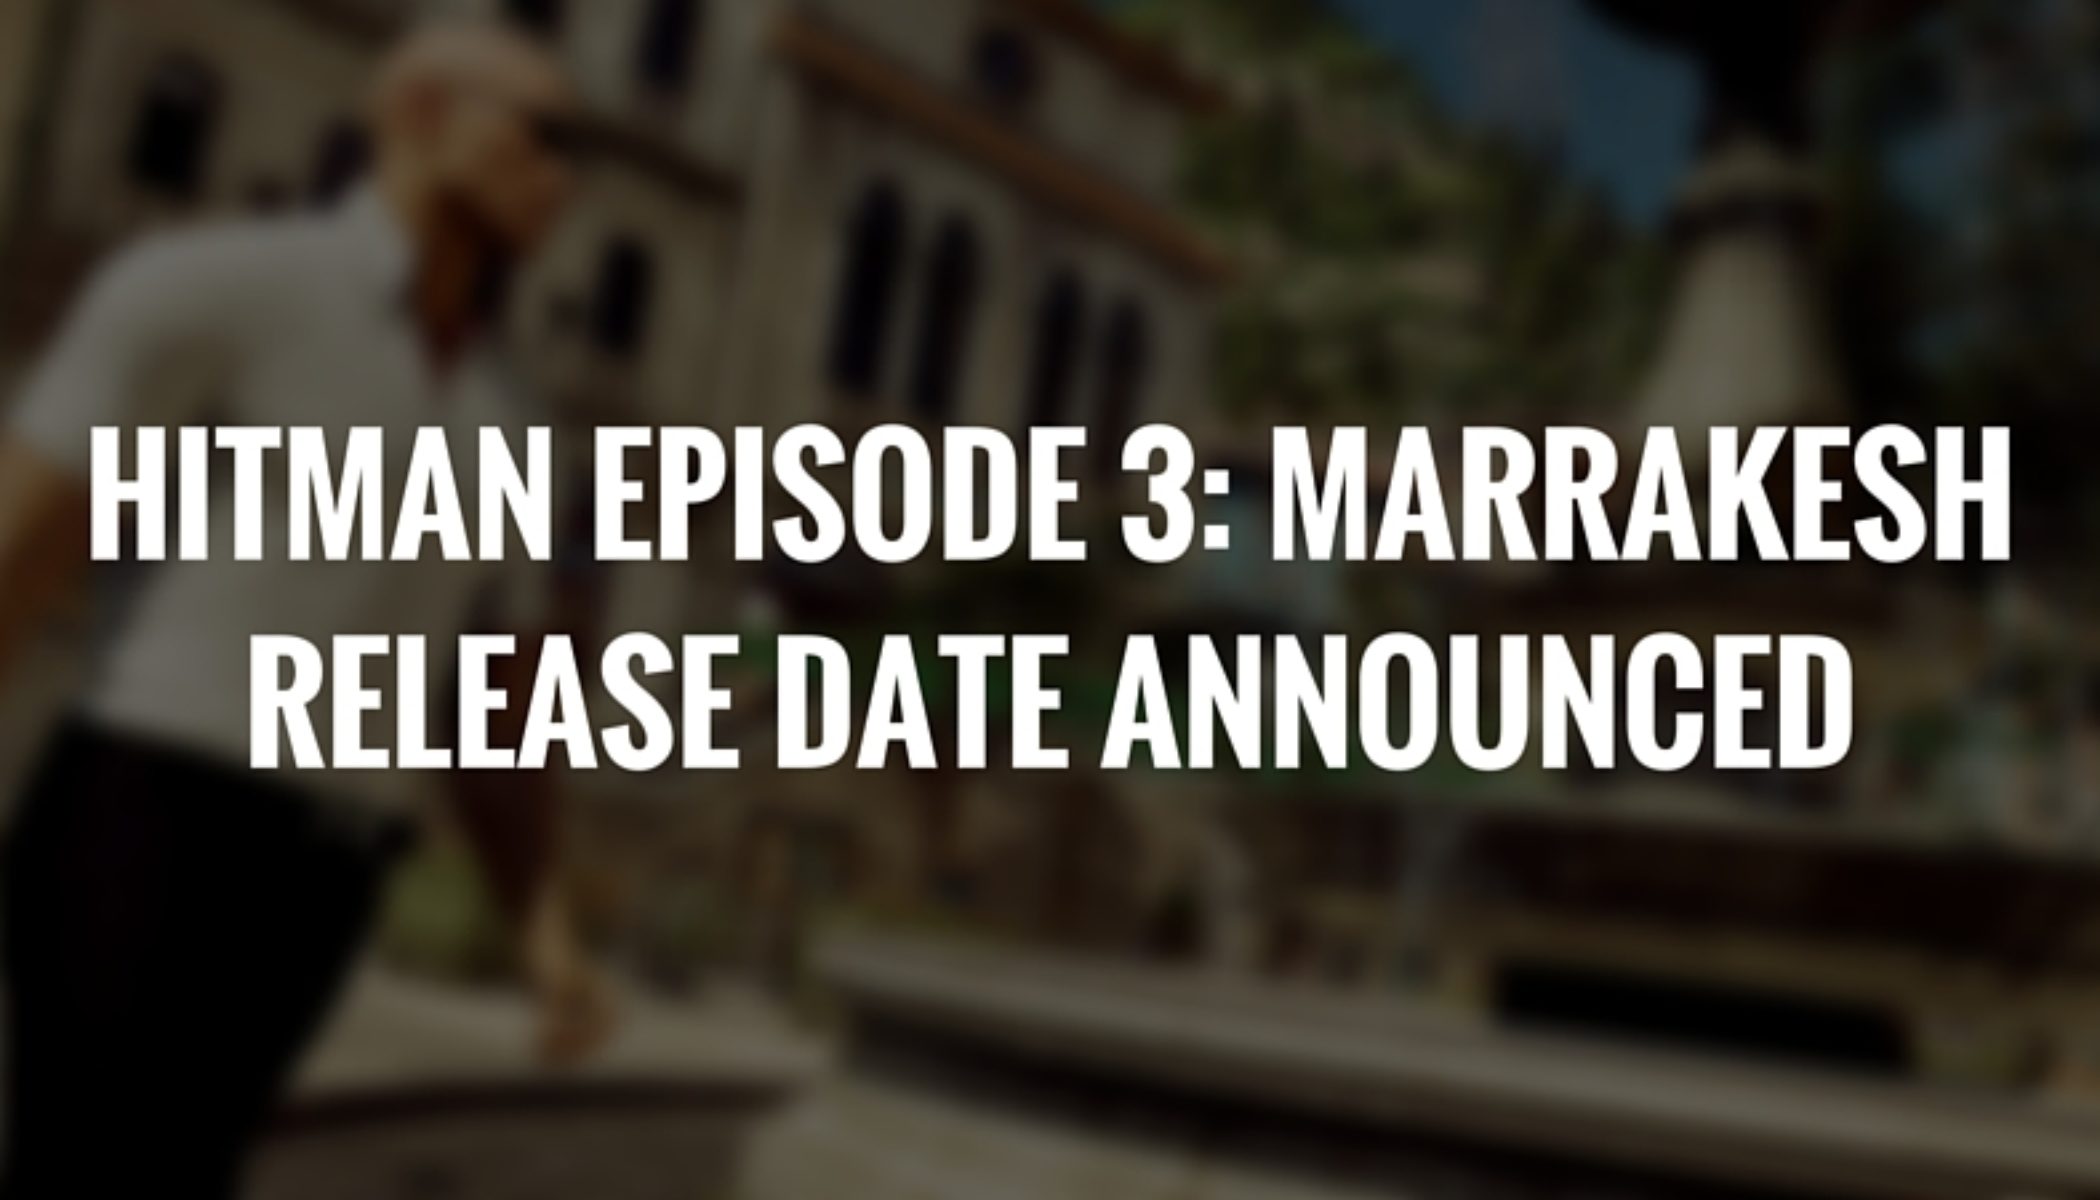 Hitman - Episode 3: Marrakesh